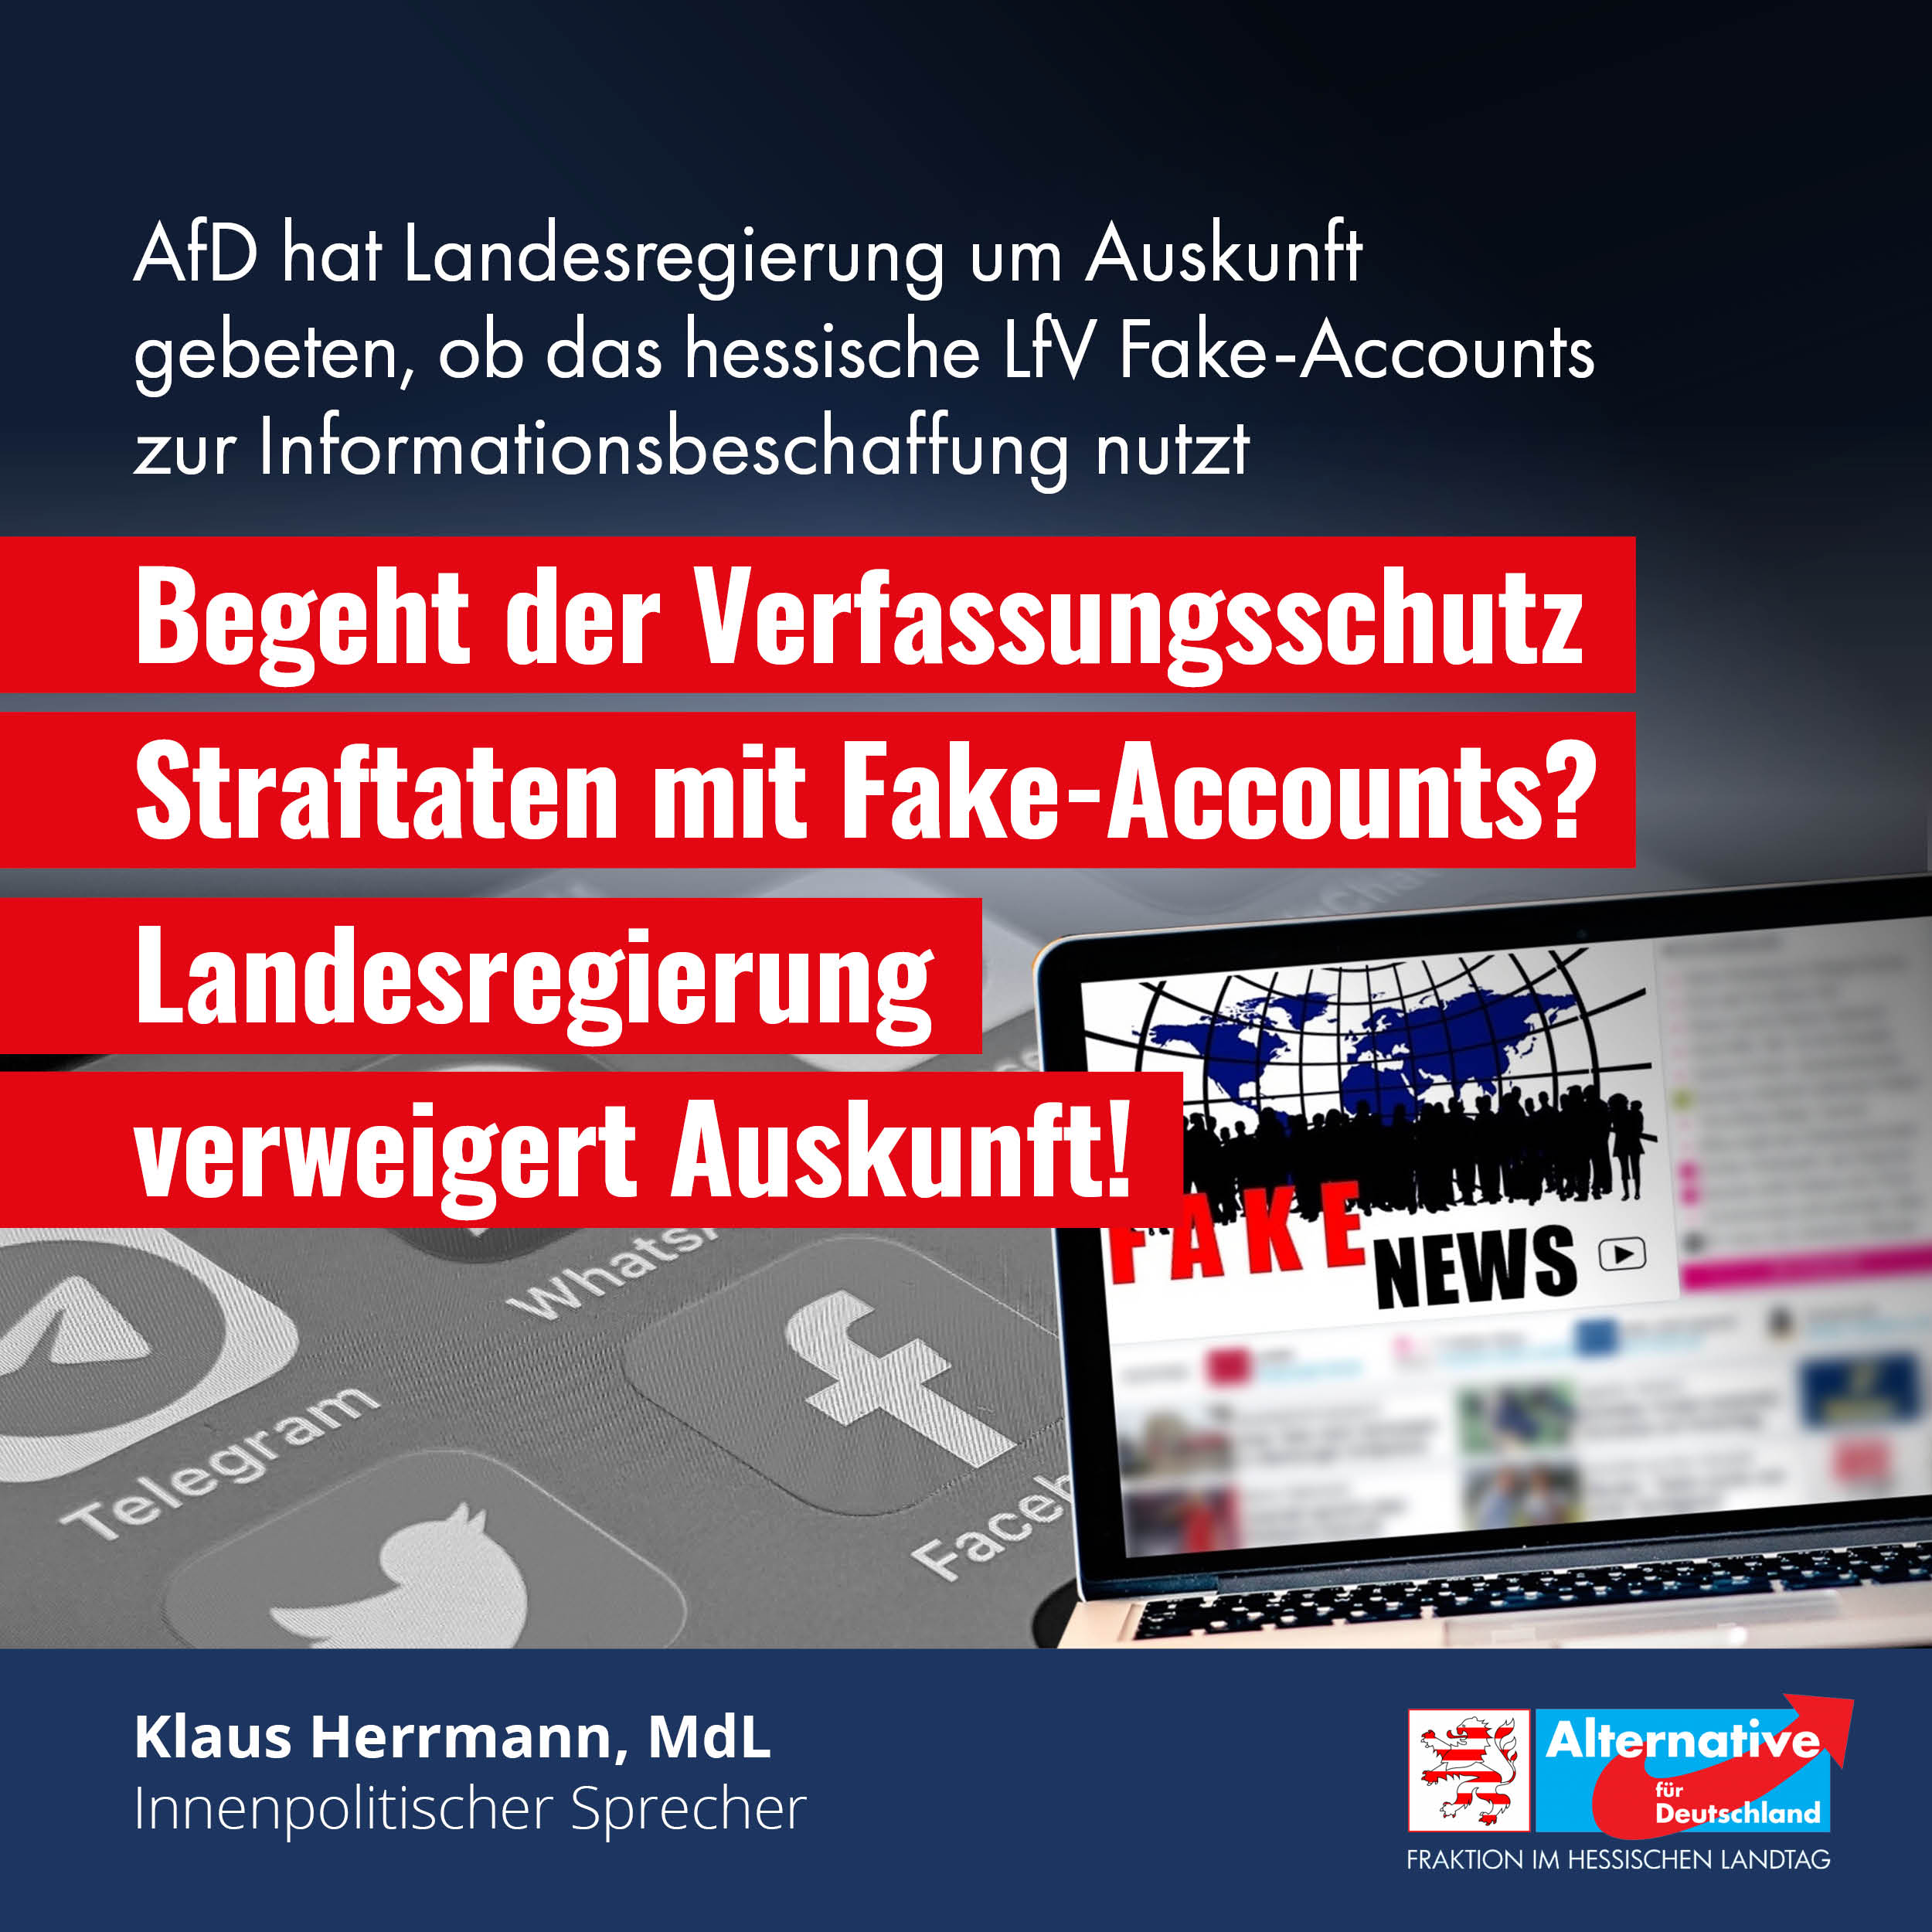 You are currently viewing Landesregierung verweigert Auskunft zu Fake-Accounts